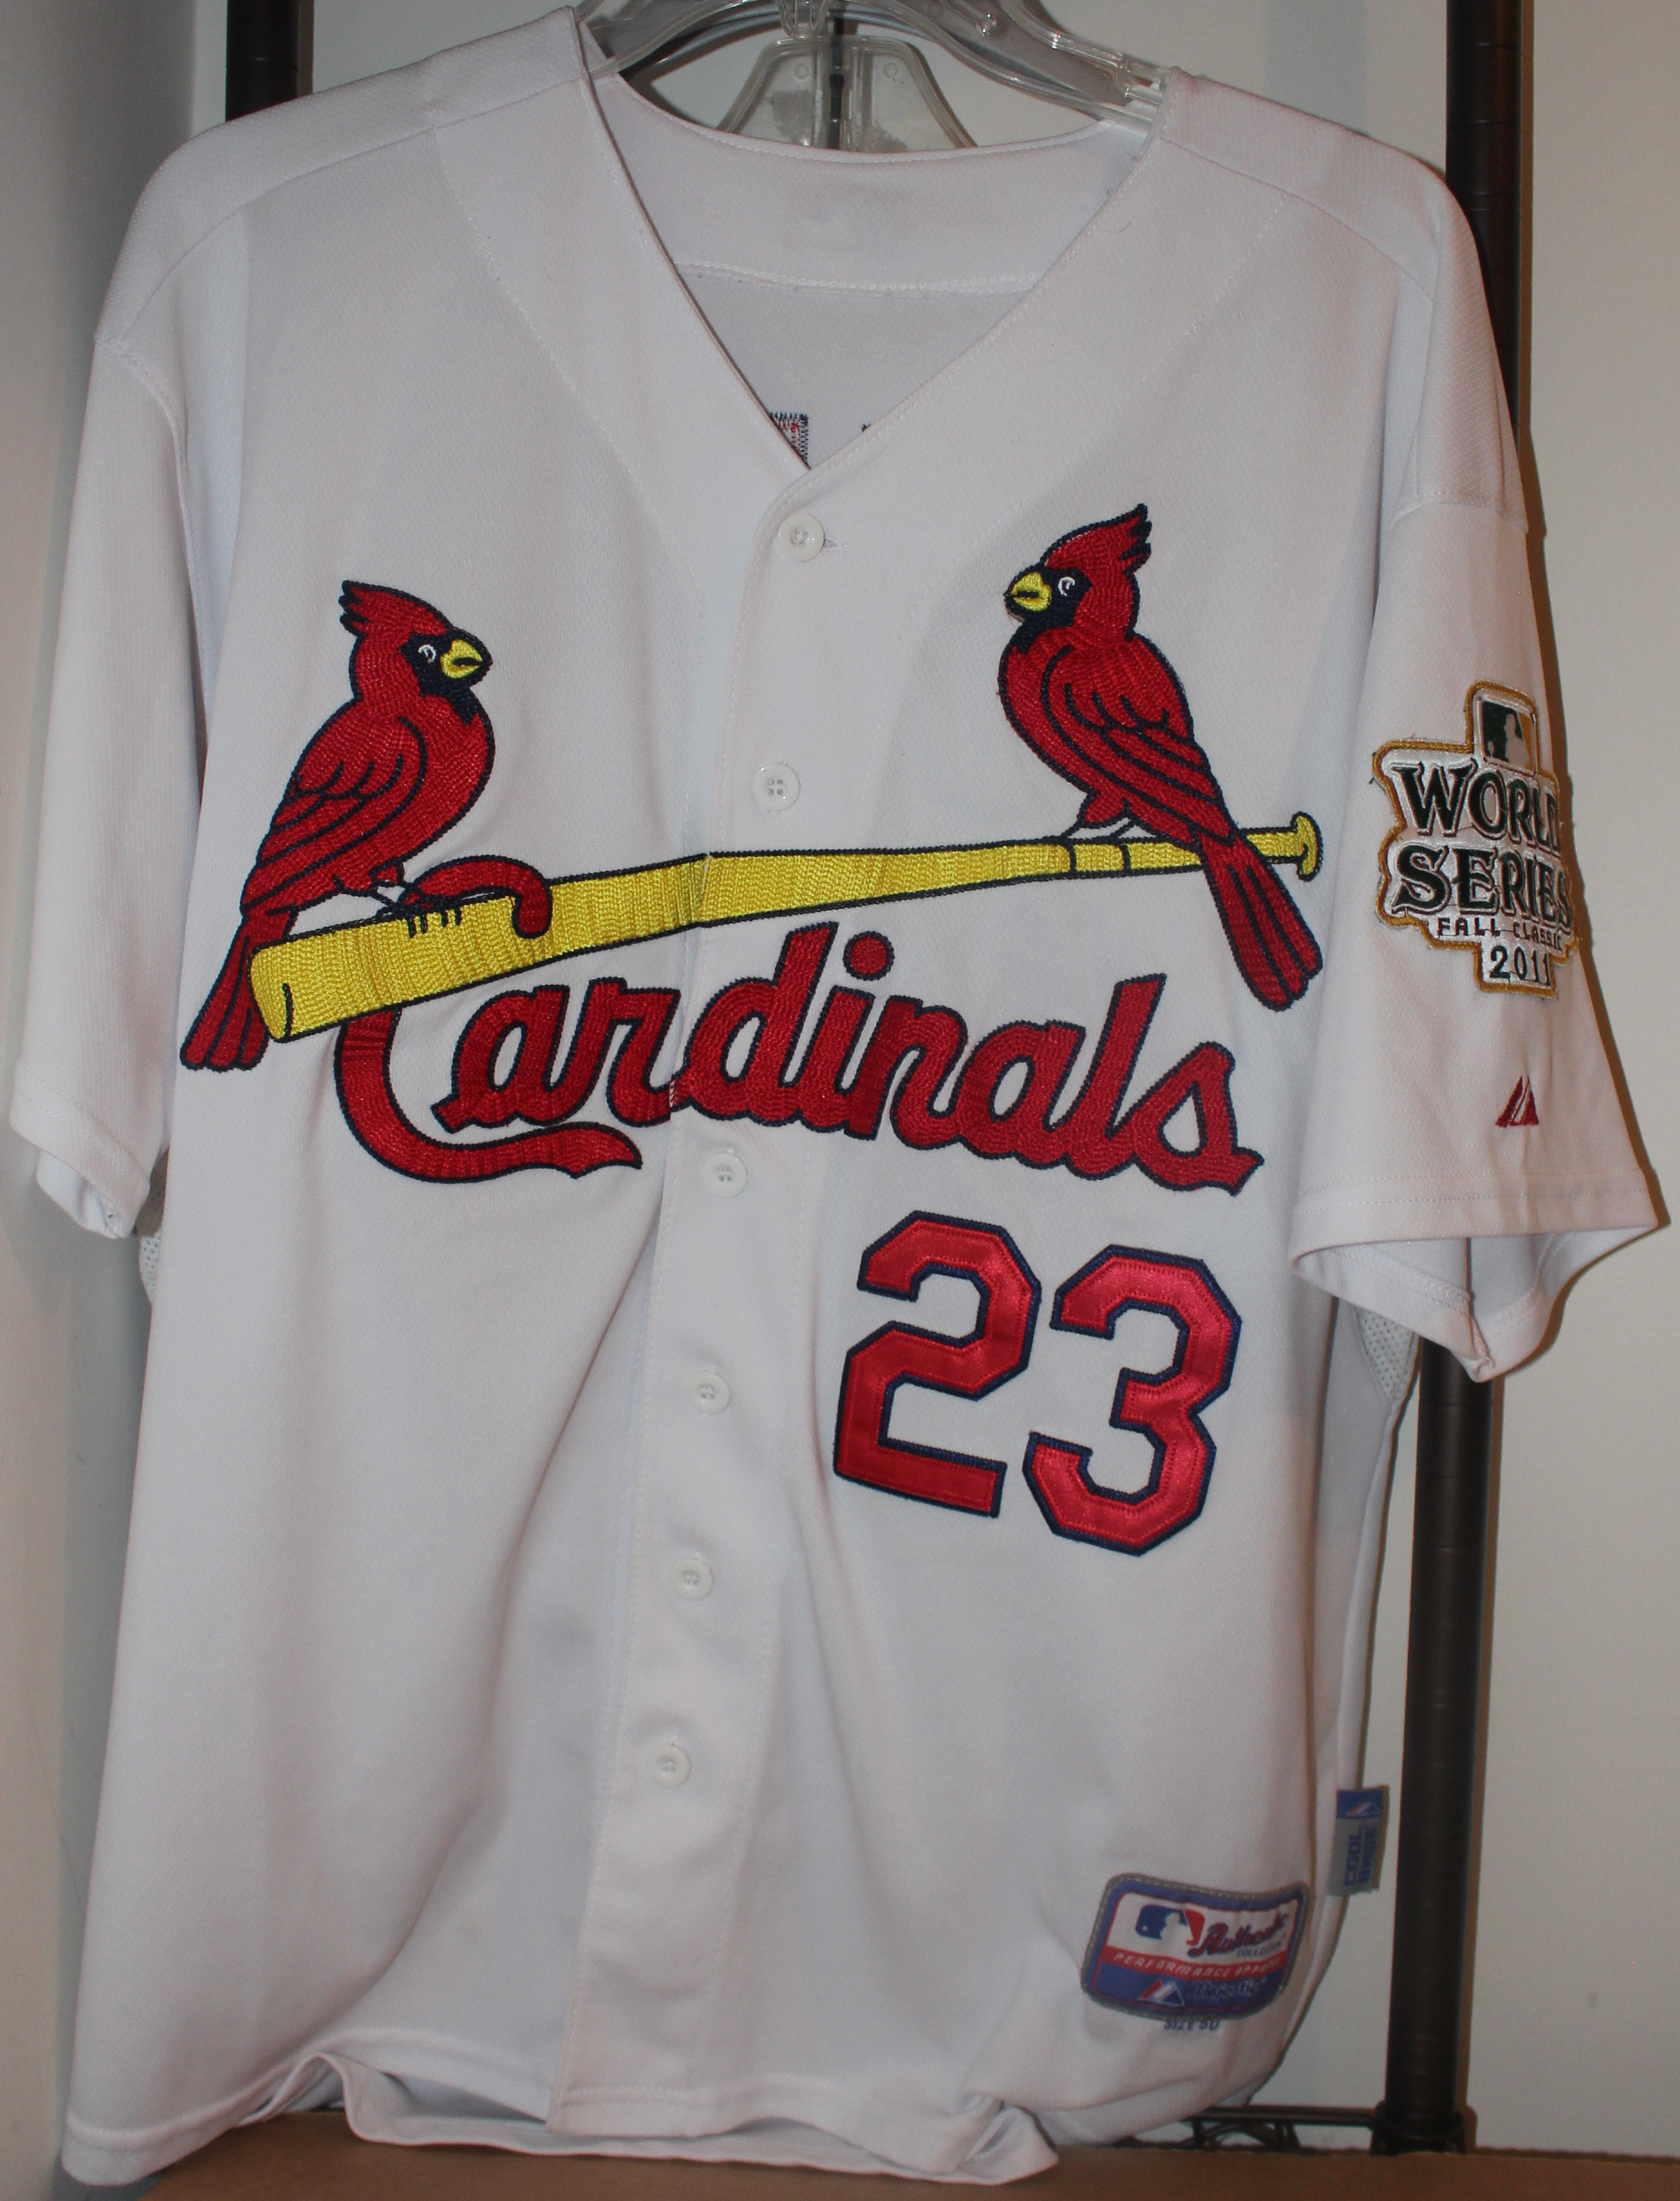 St. Louis Cardinals 2011 World Series Championship Patch